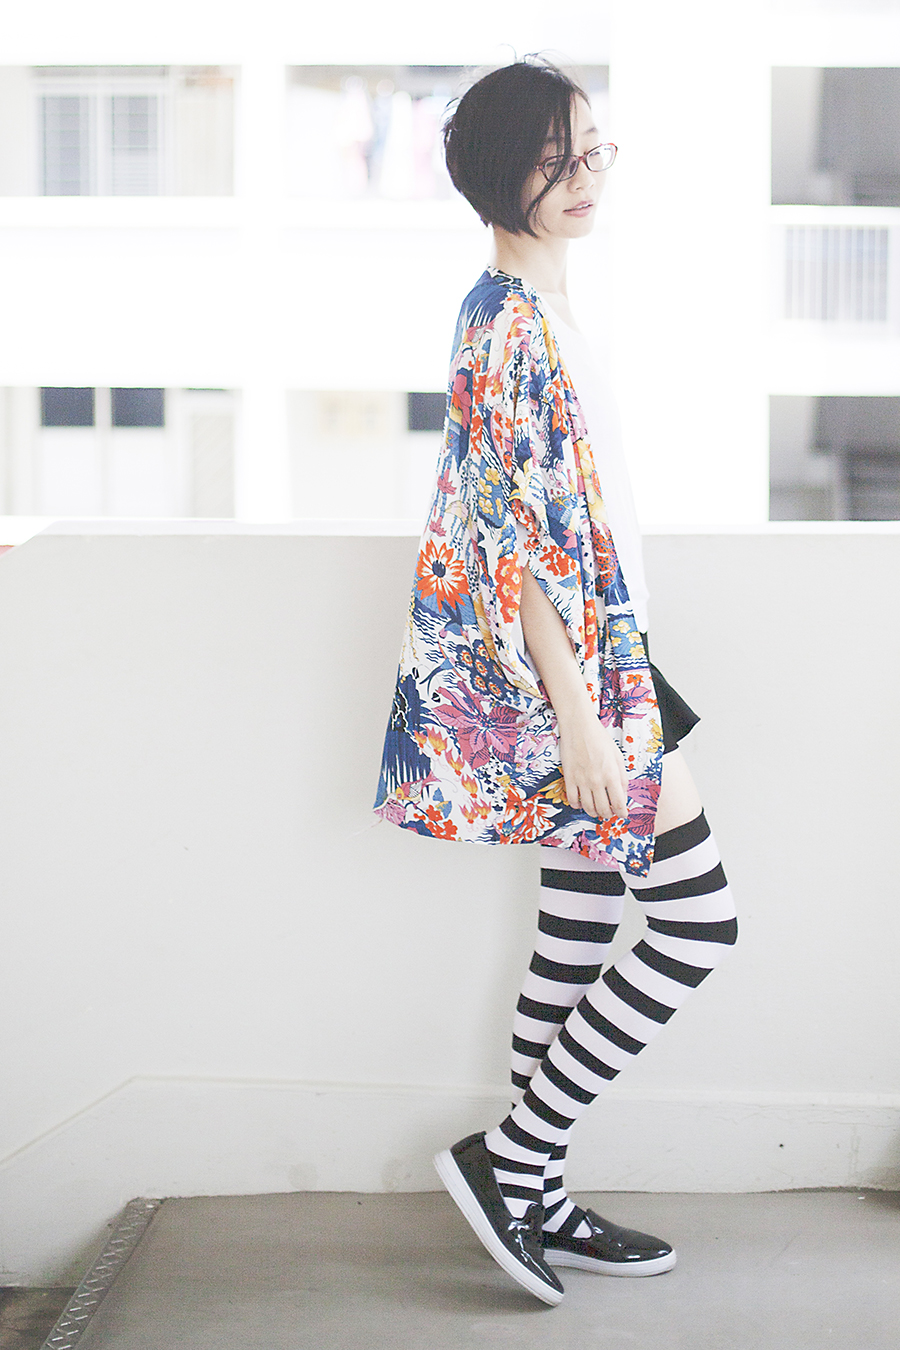 Dresslink floral kimono, We Love Colors black & white striped thigh high socks, Zalora shoes, Firmoo glasses.